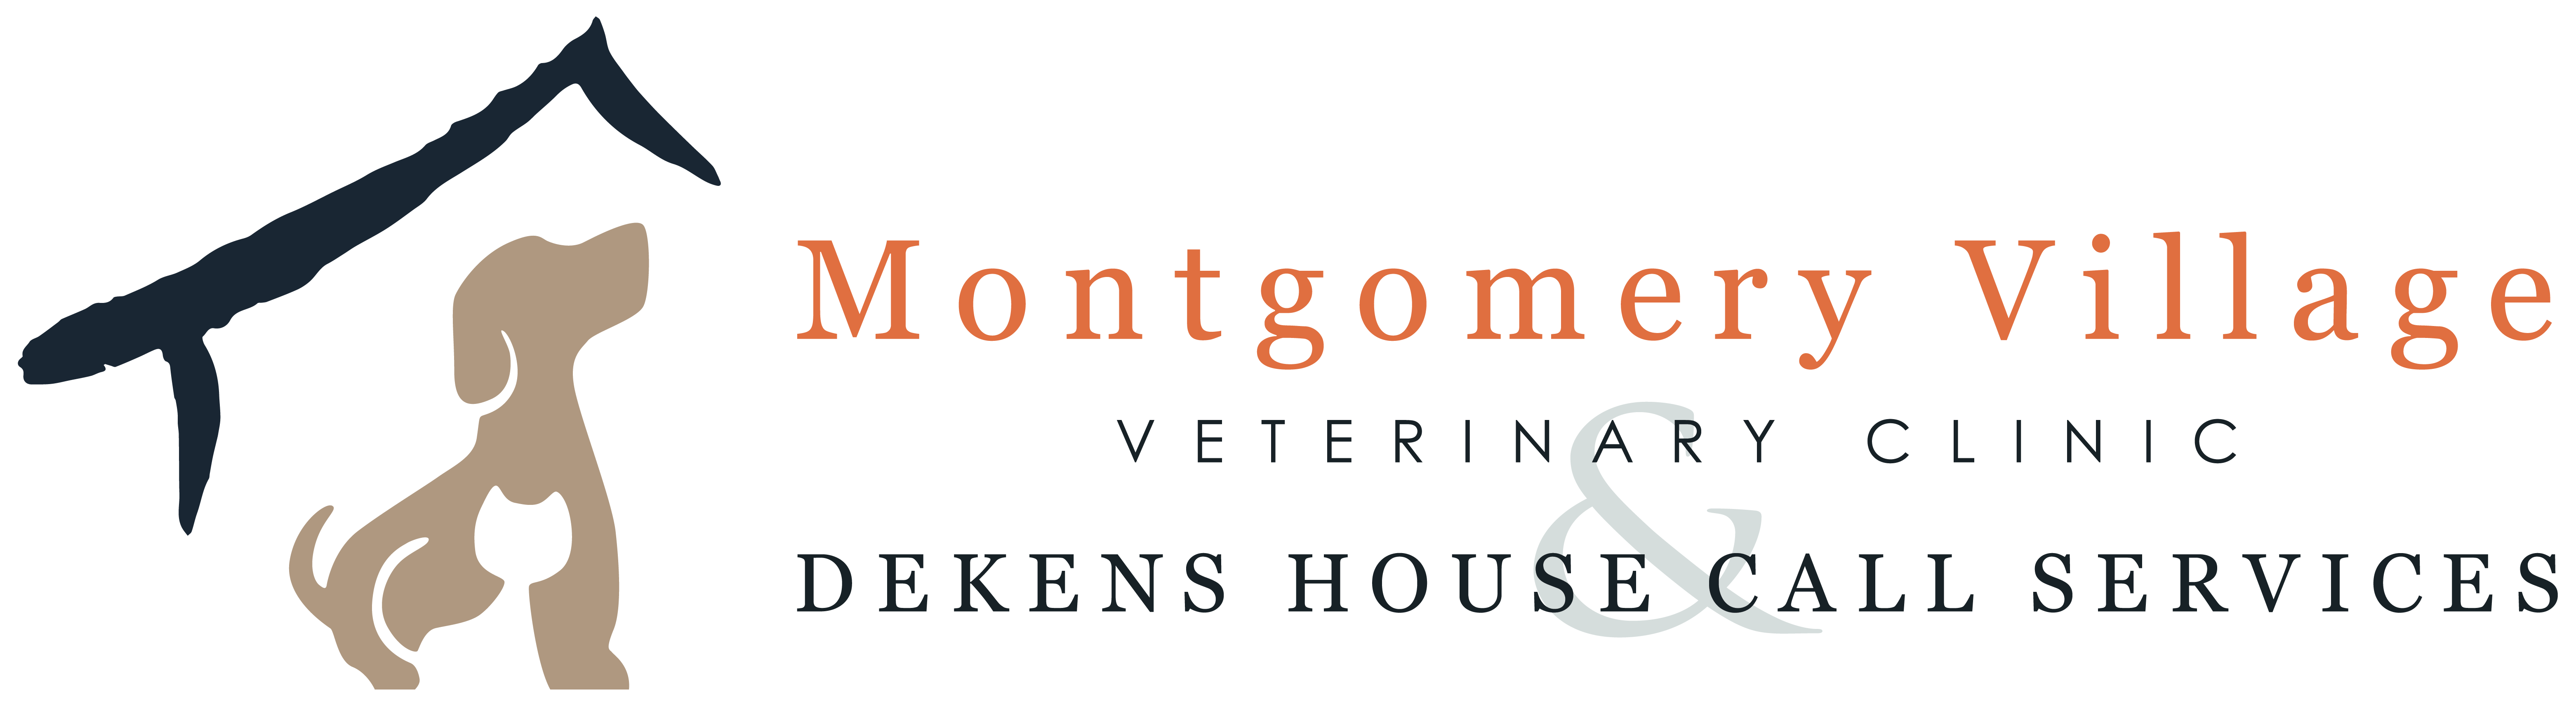 Logo of Montgomery Village Veterinary Clinic in Calgary, AB